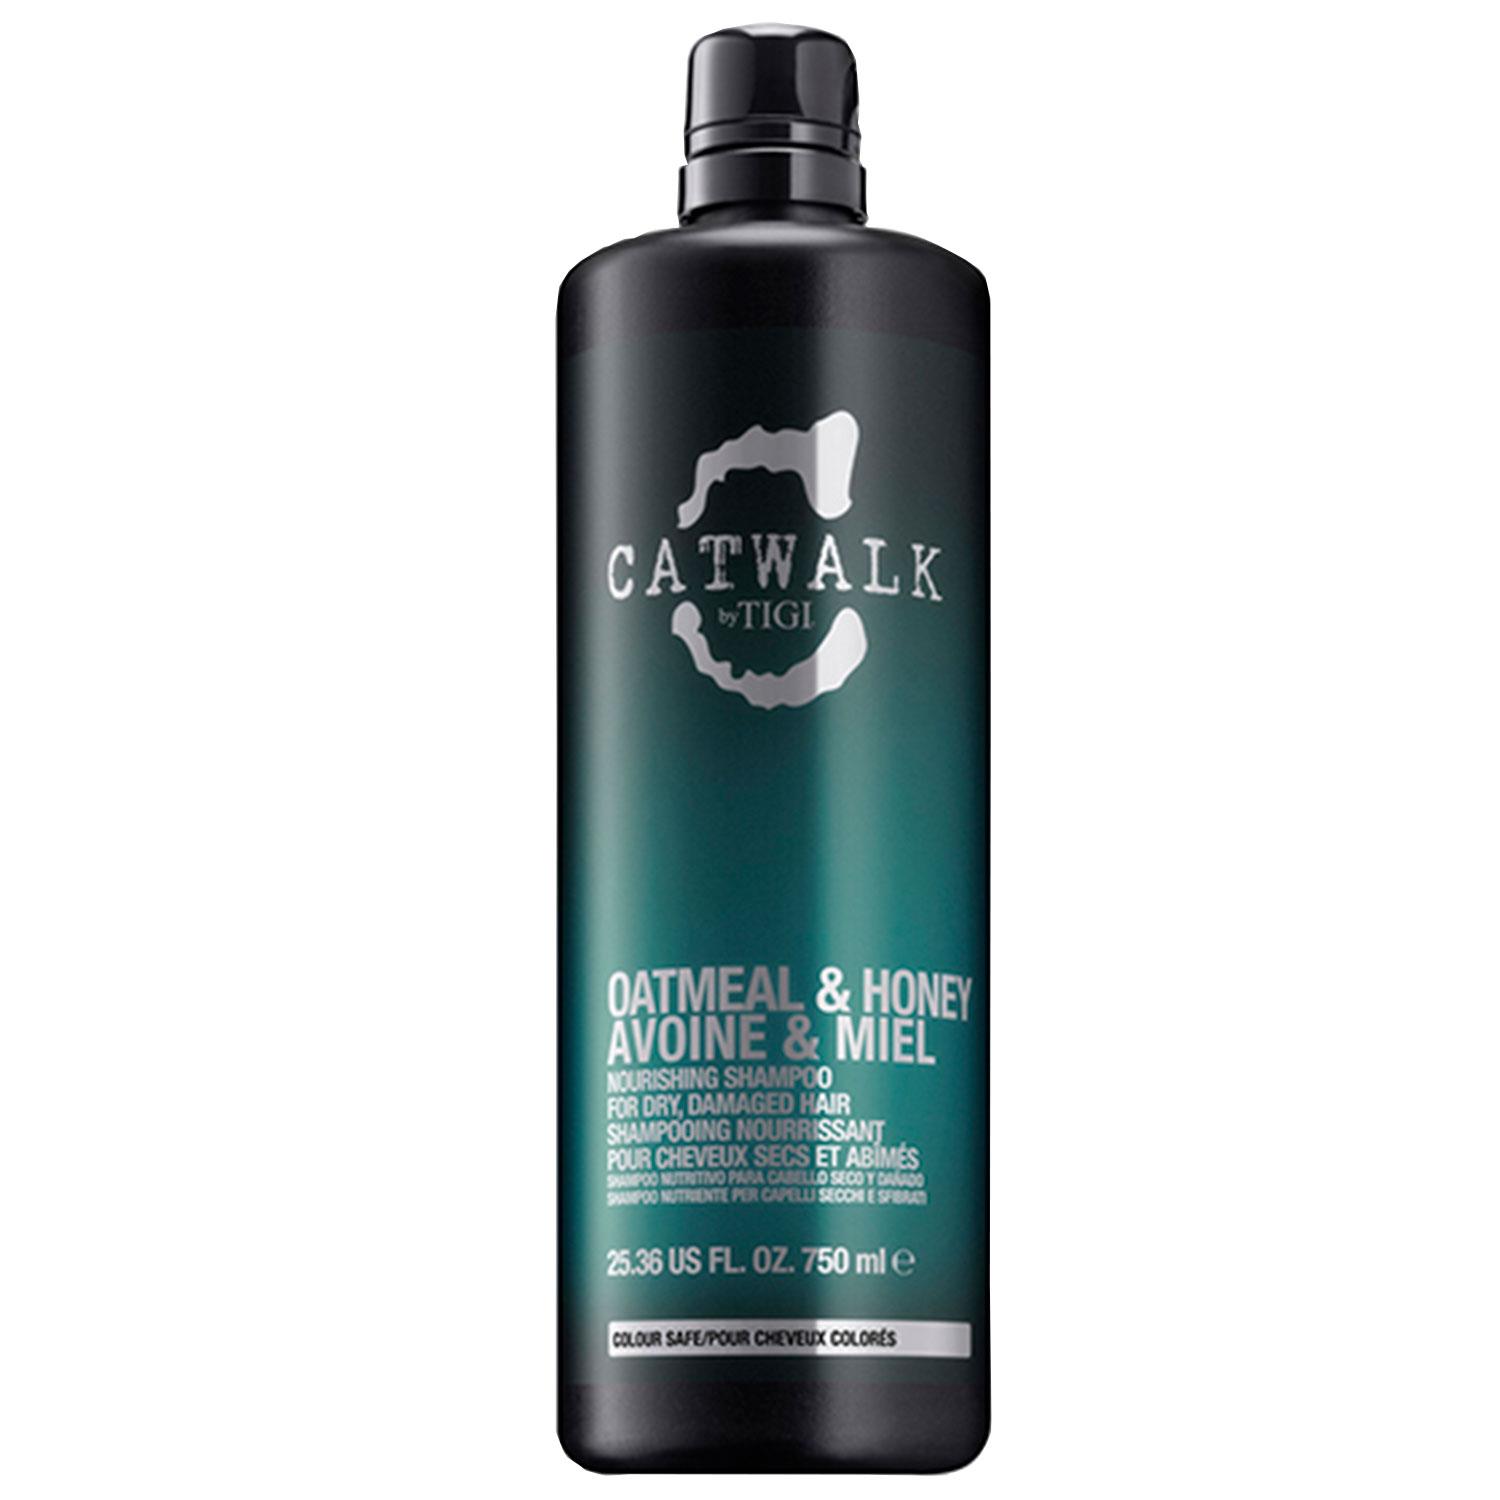 Catwalk by Tigi Oatmeal & Honey Nourishing Shampoo and Conditioner 2x750ml,1PK